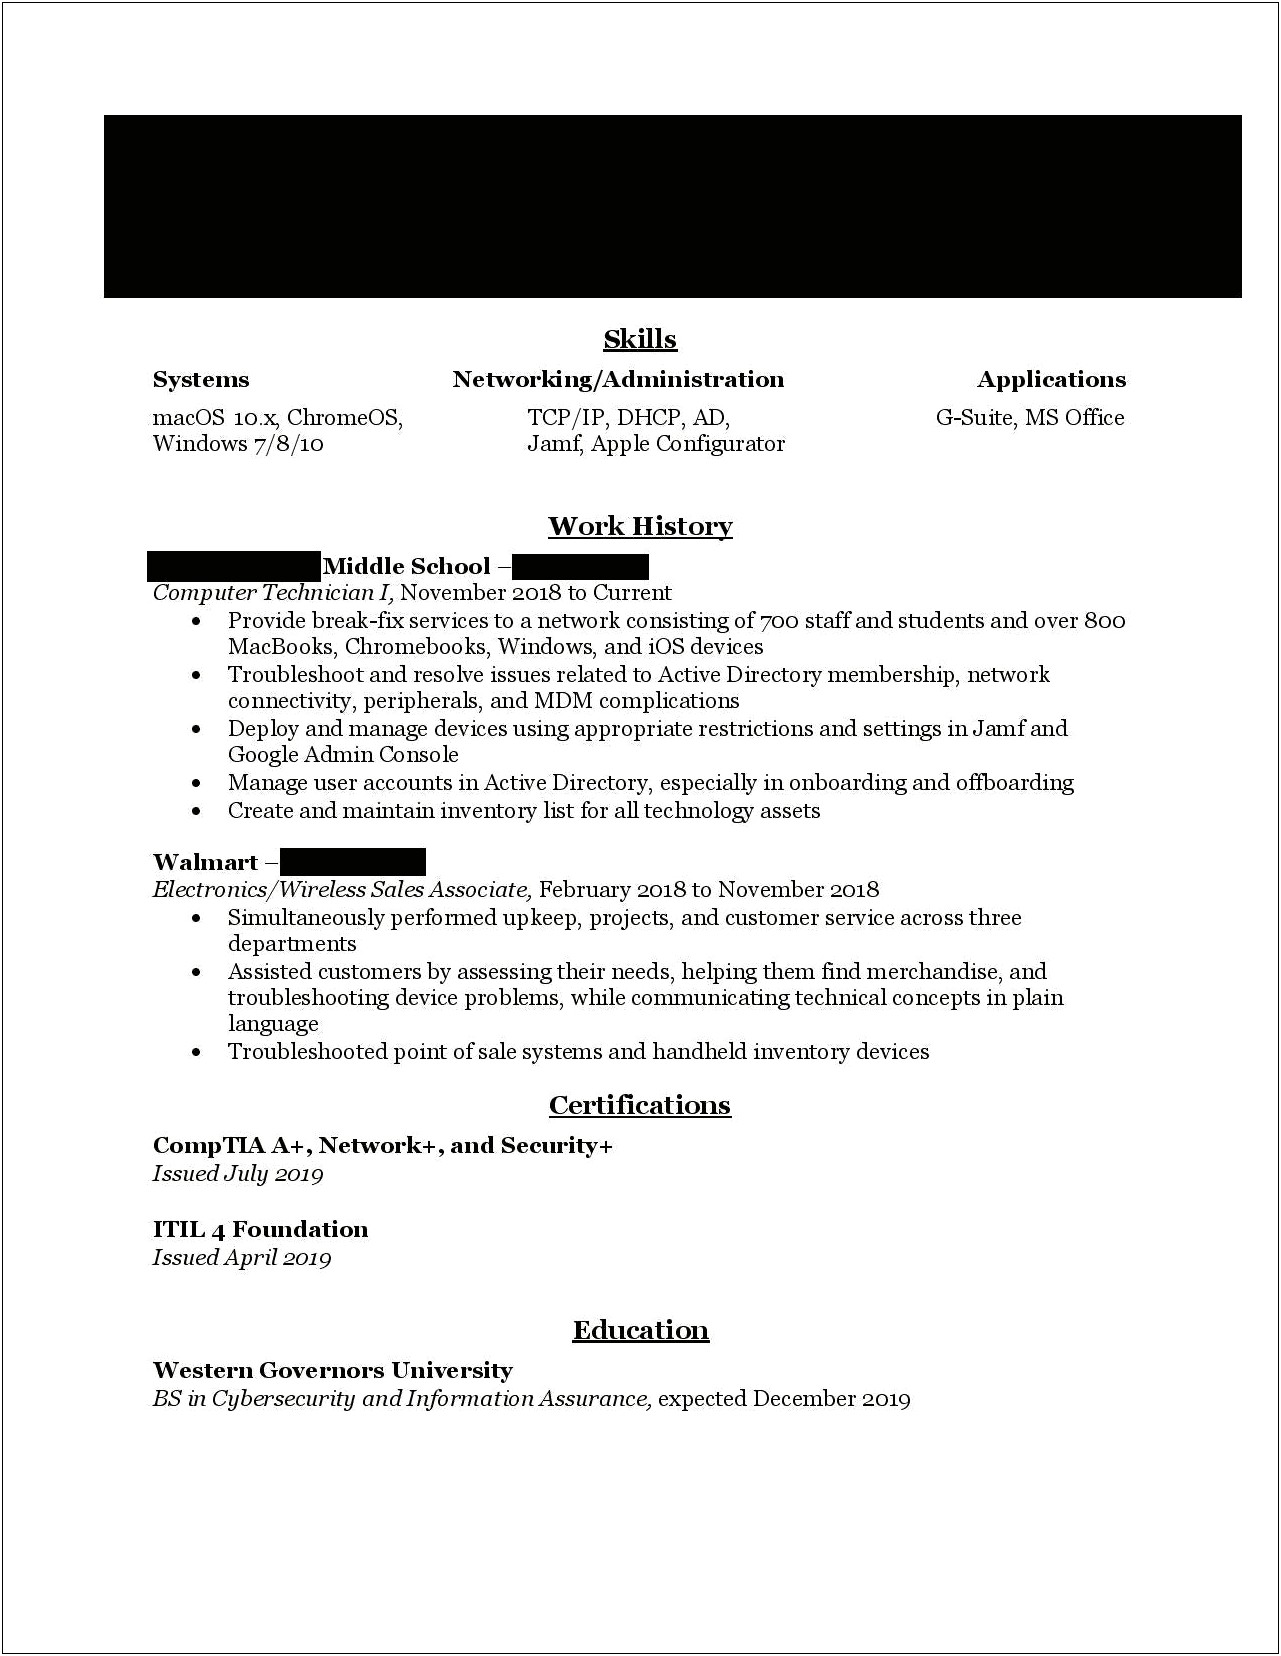 Resume For Walmart Electronics Associate Job Description